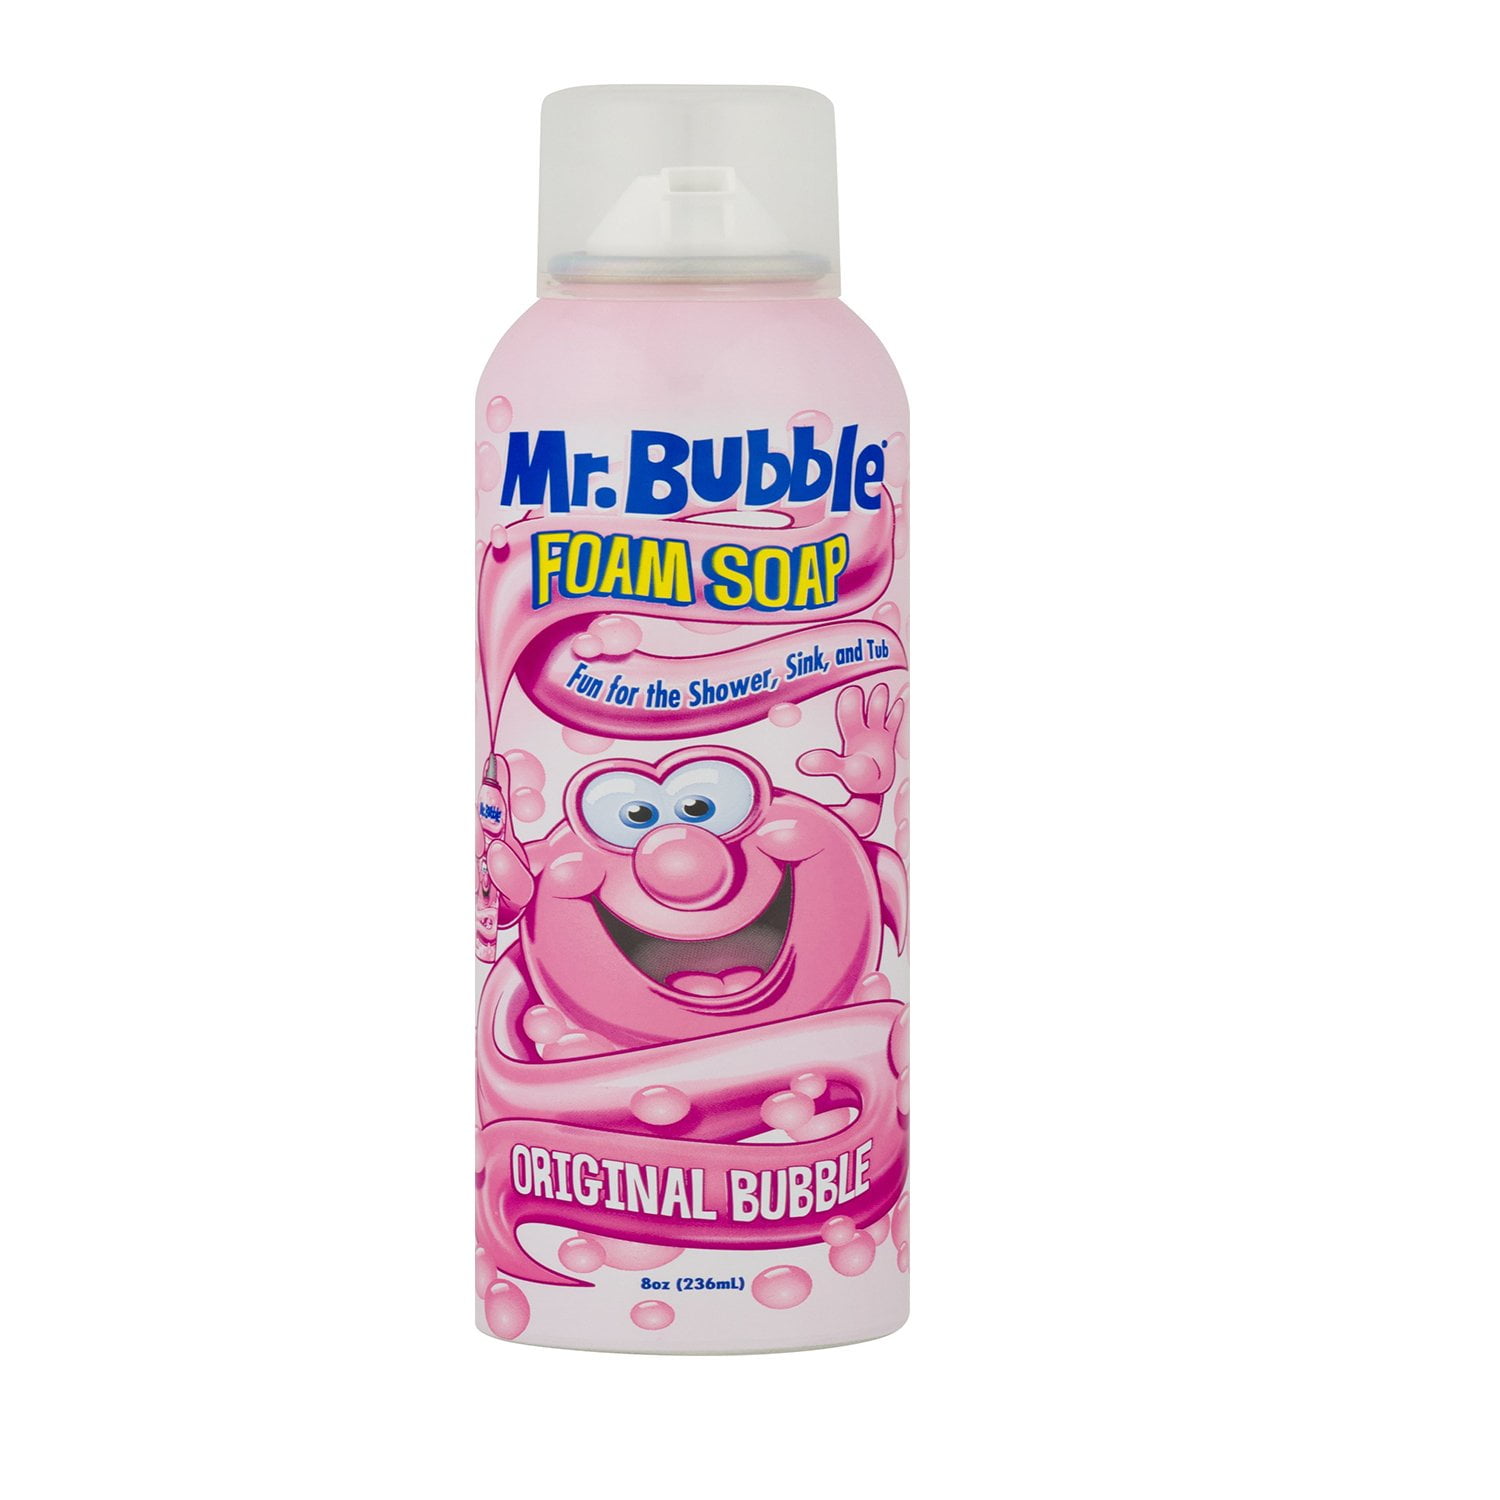 Mr. Bubble Original Foam Soap Original Bubble Gum Scent 8 Oz, 5